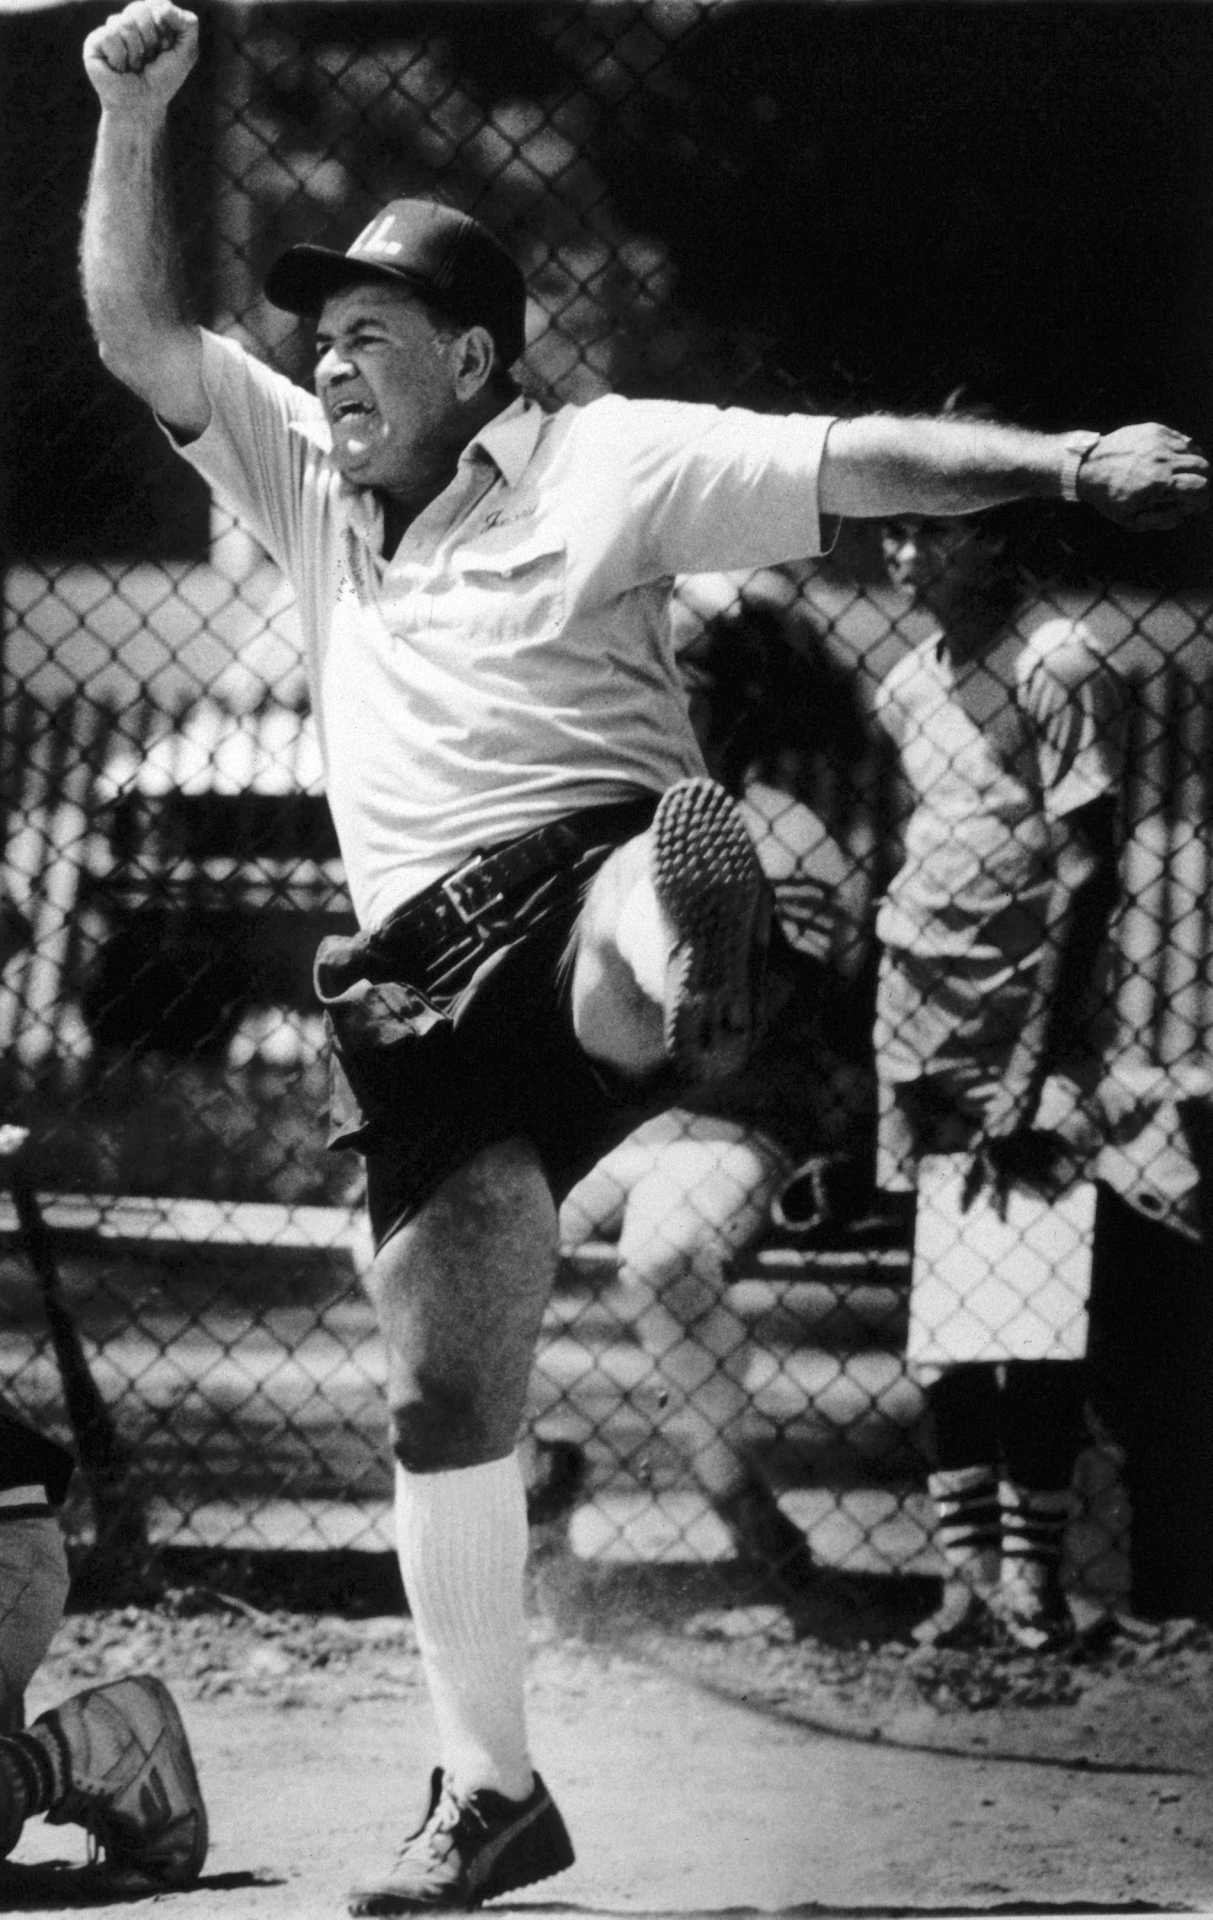 Umpire Jerry DeJulia calls a baseball game. 1987